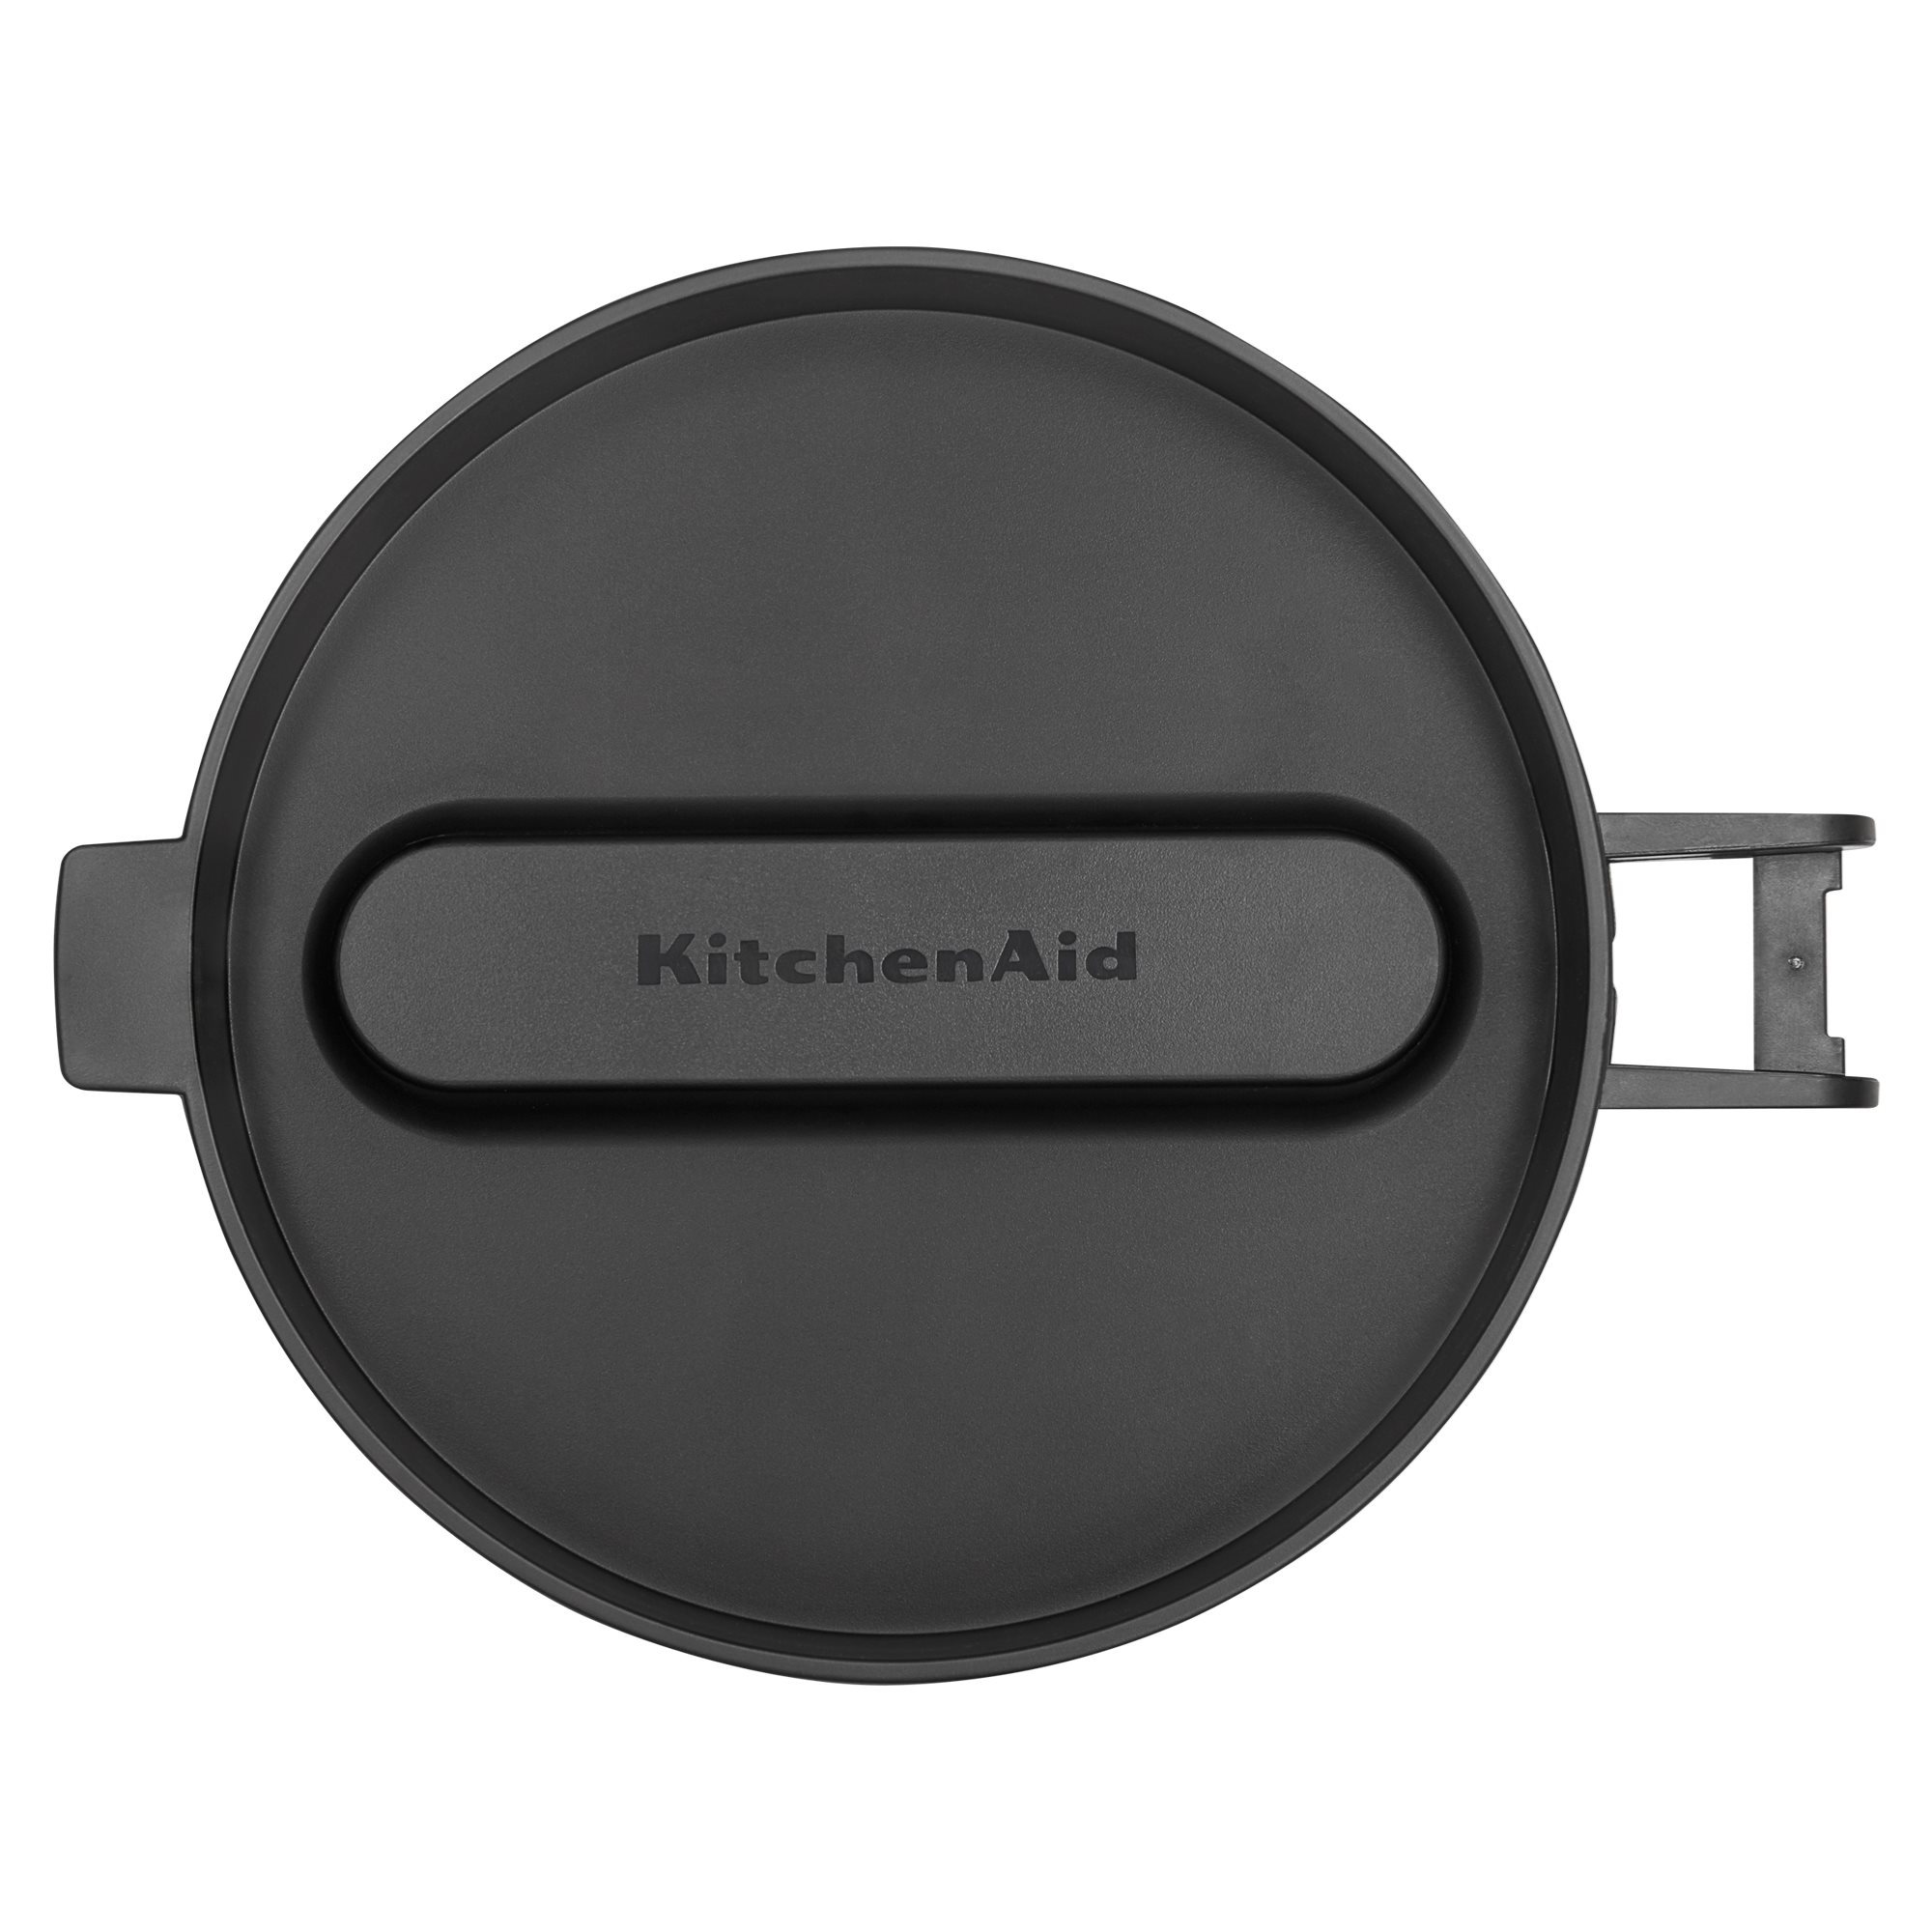 Procesador alimentos KitchenAid - Modelo 5KFP0919